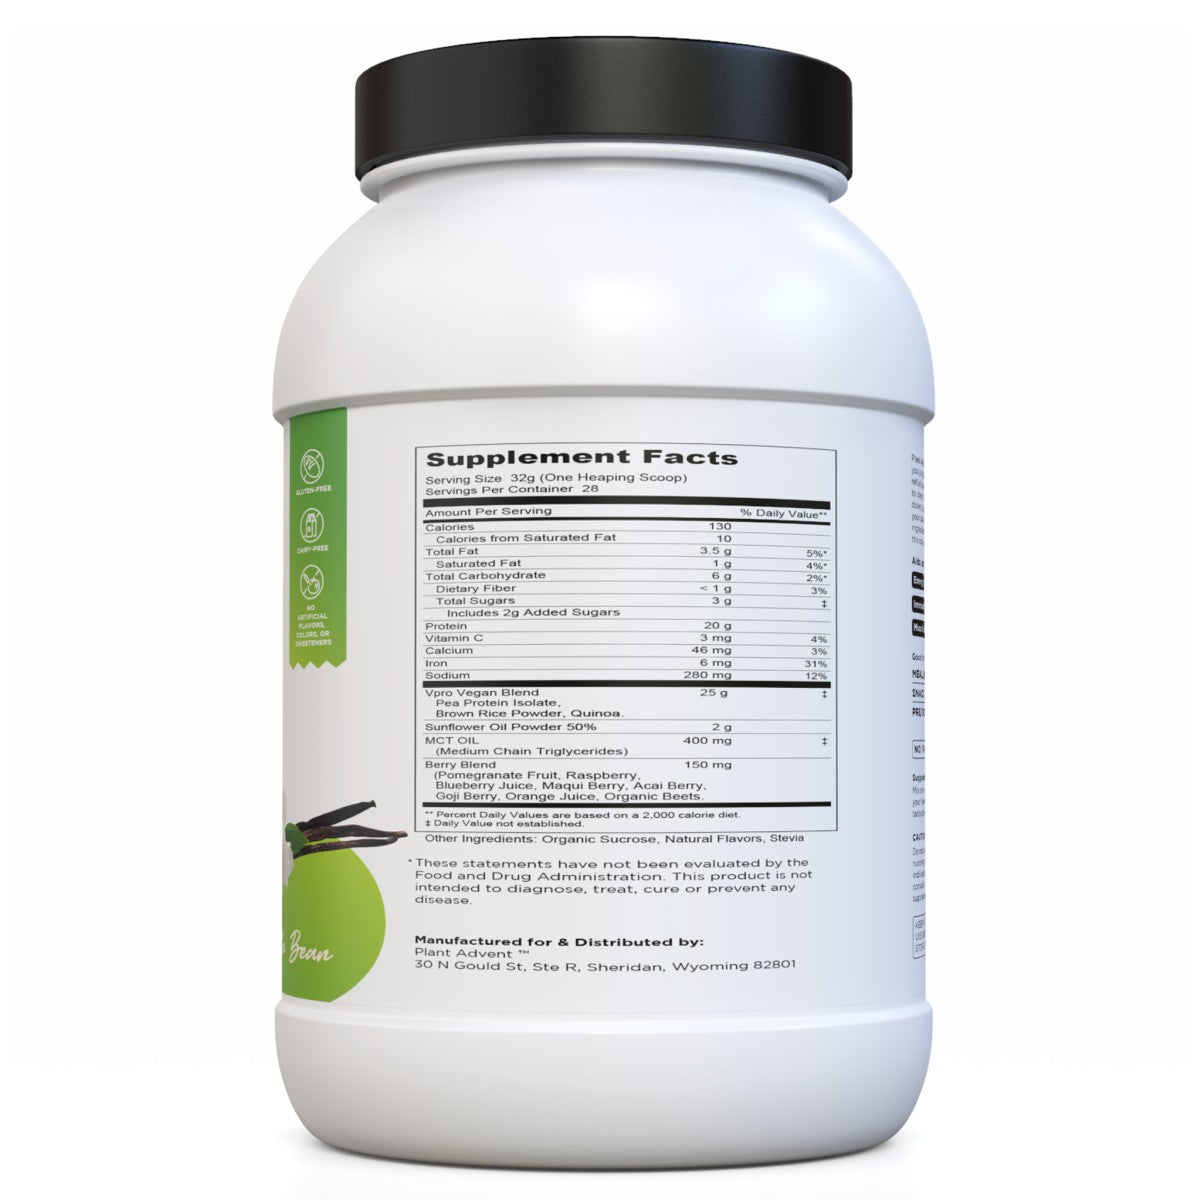 Premium Plant-Based Protein Powder (Vanilla Bean)